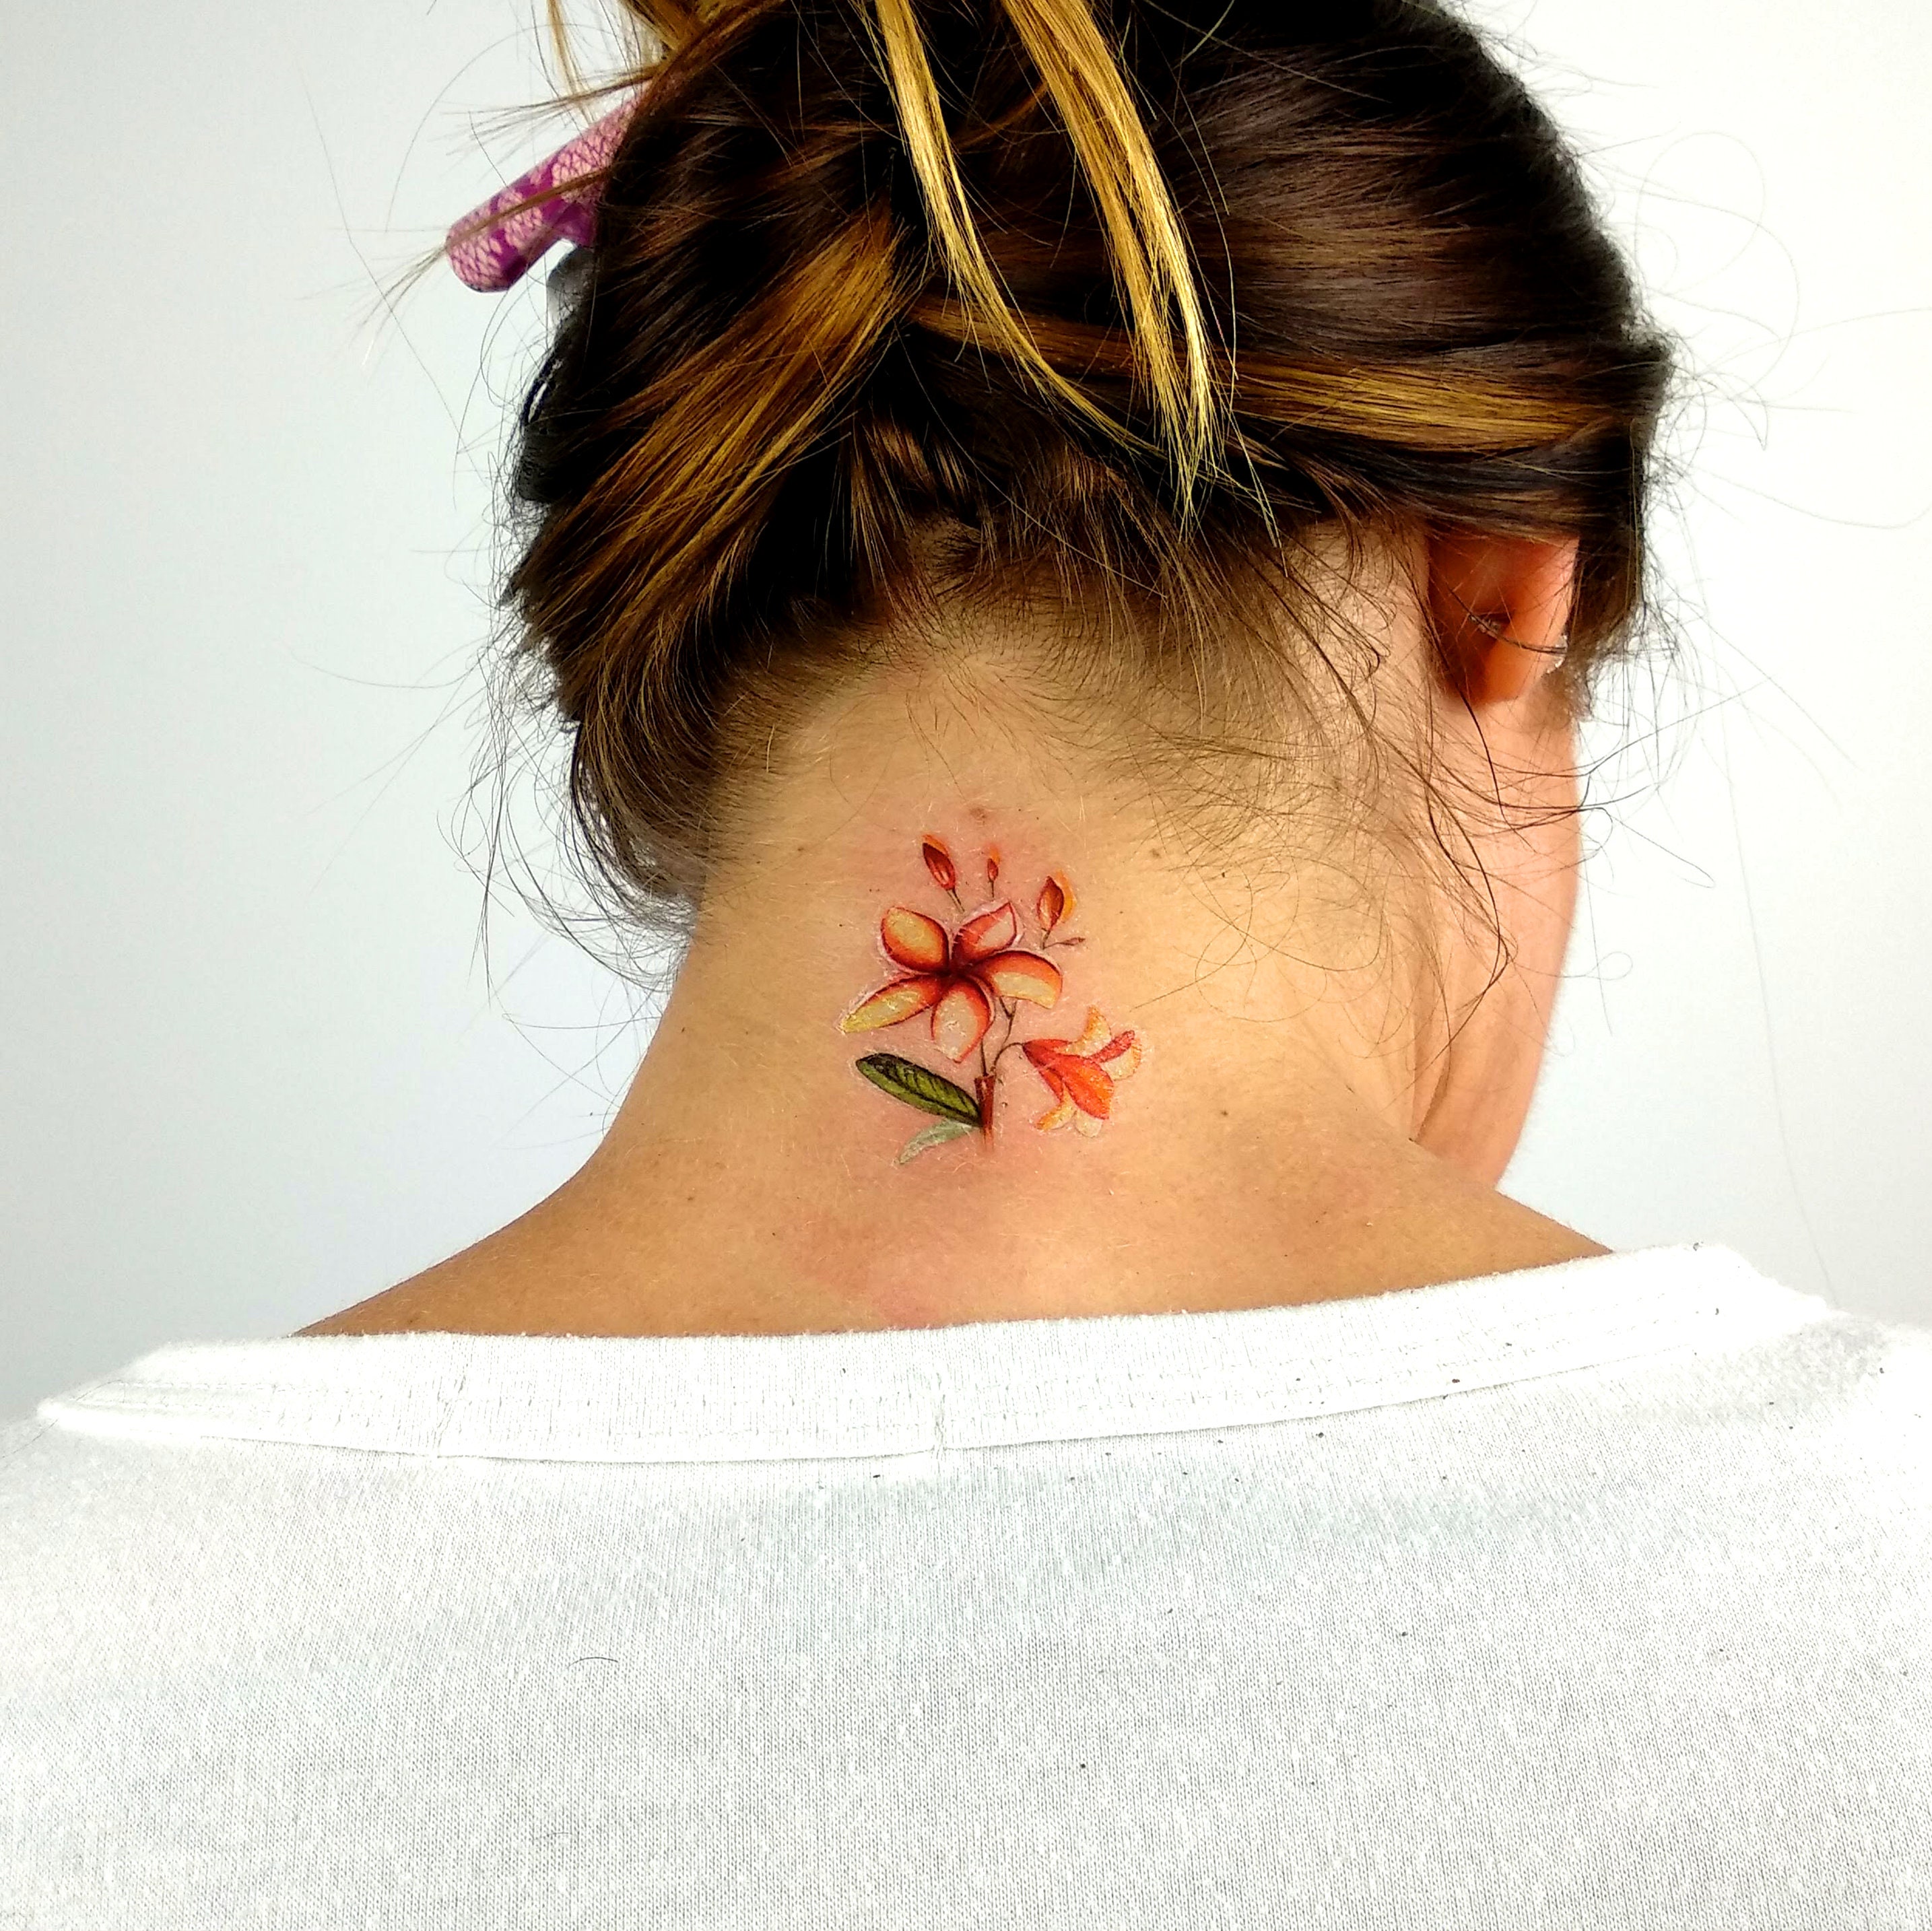 Beautiful colourful plumeria flower on a forearm | Plumeria flower tattoos, Flower  tattoos, Plumeria